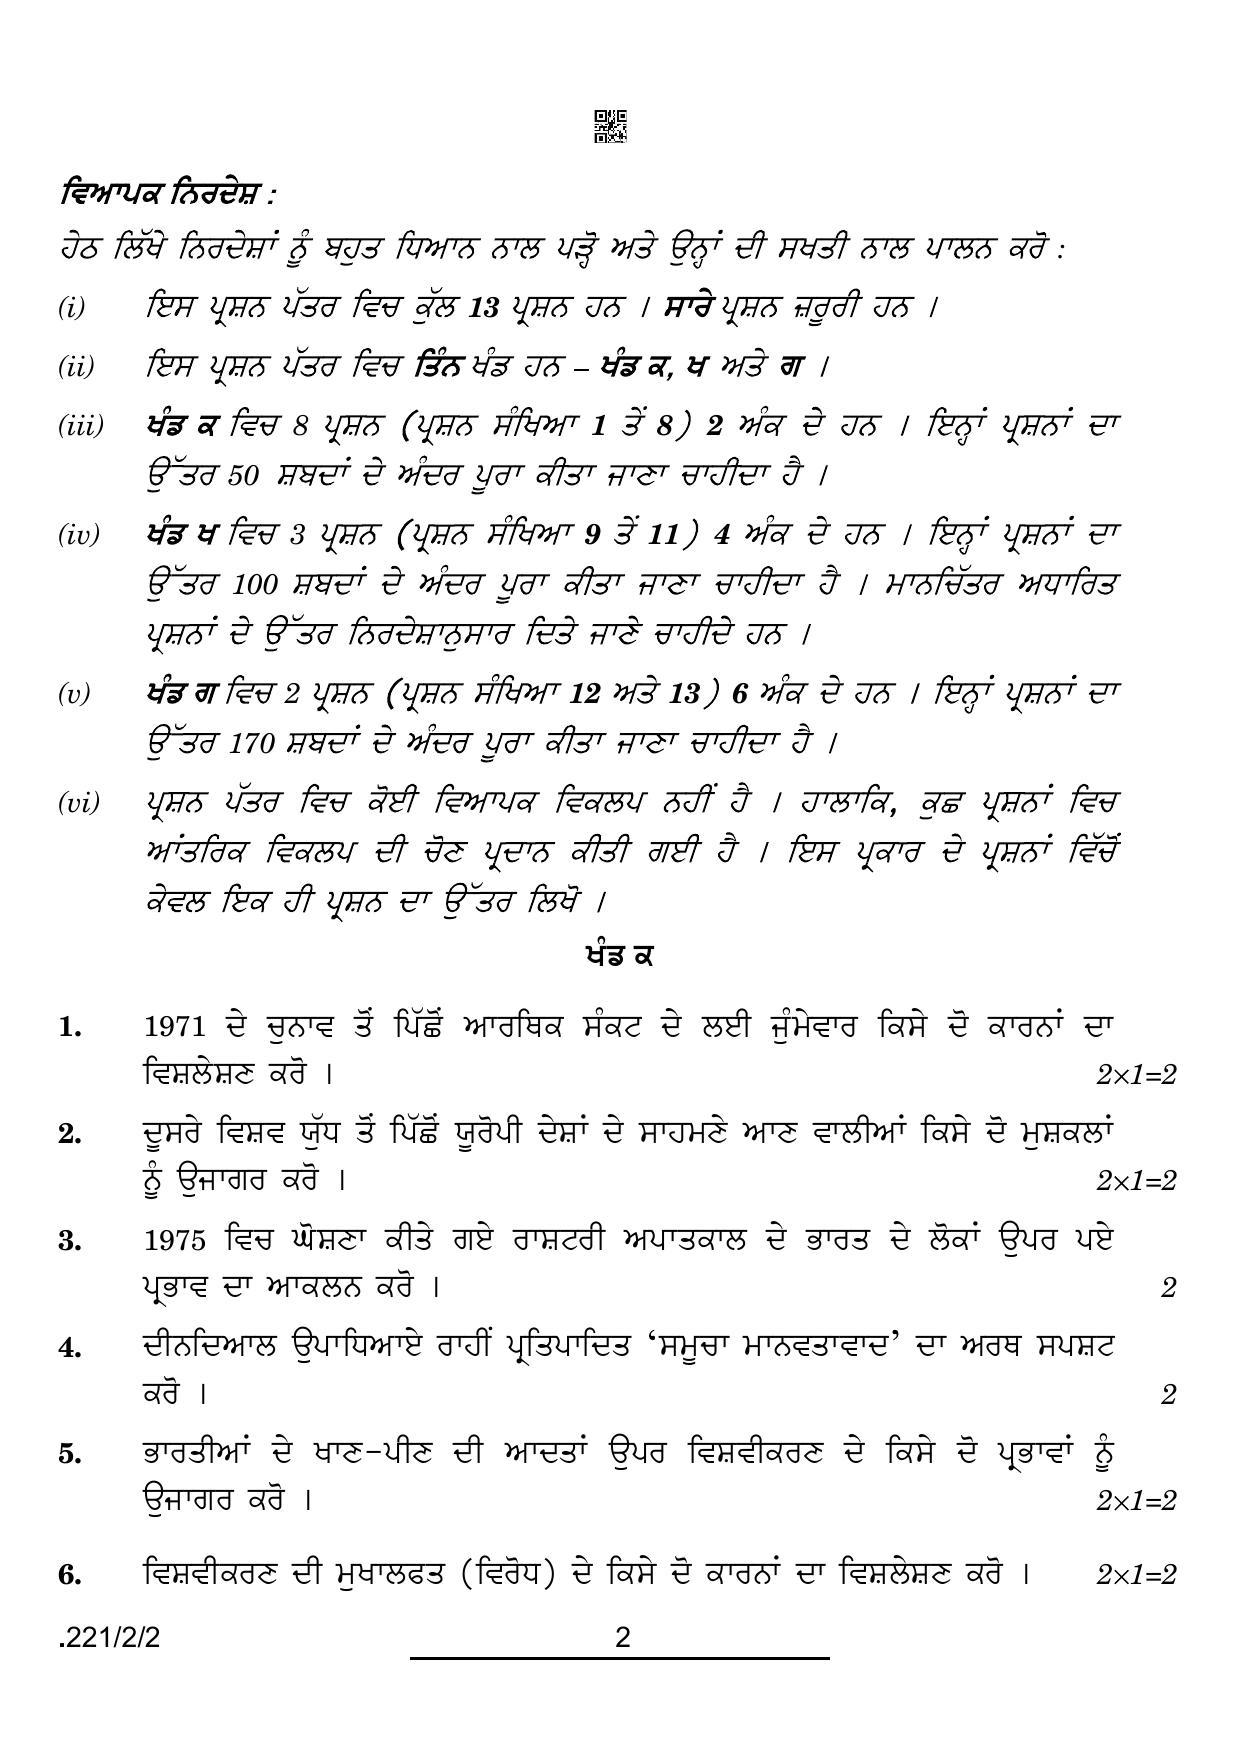 CBSE Class 12 221-2-2 Political Science Punjabi Version 2022 Question Paper - Page 2